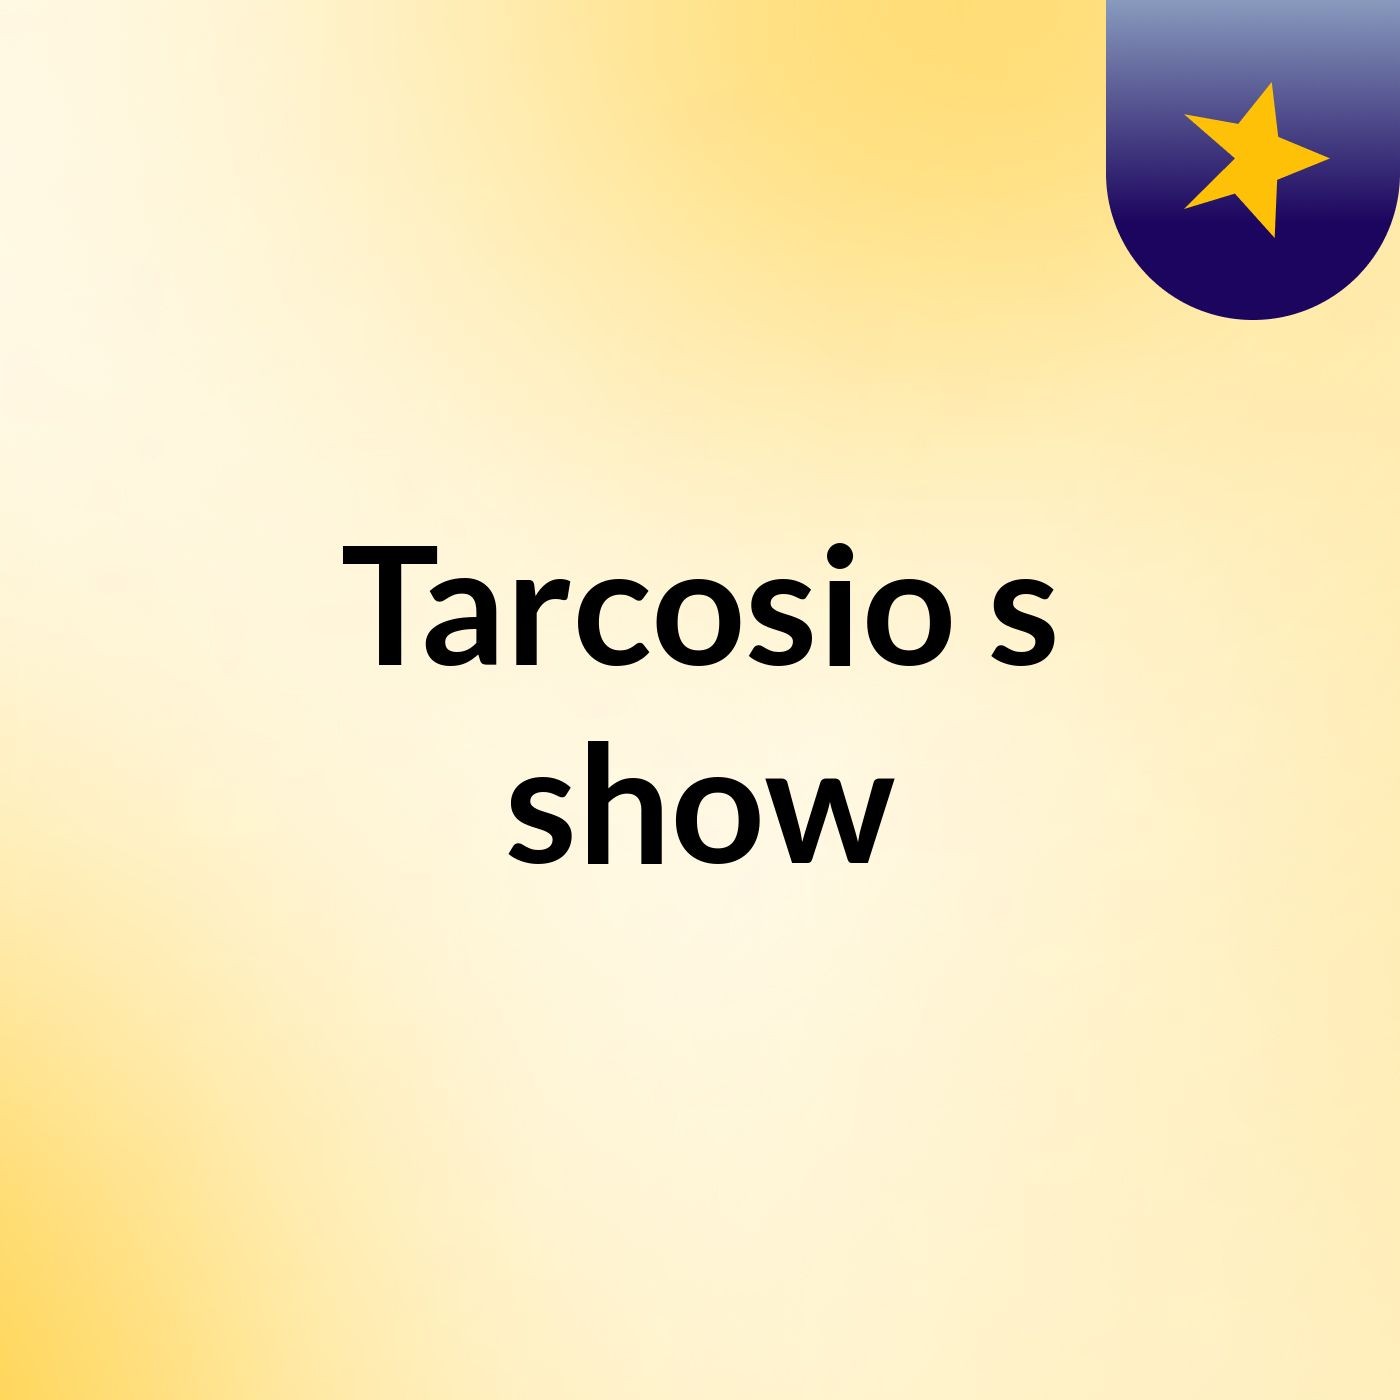 Tarcosio's show